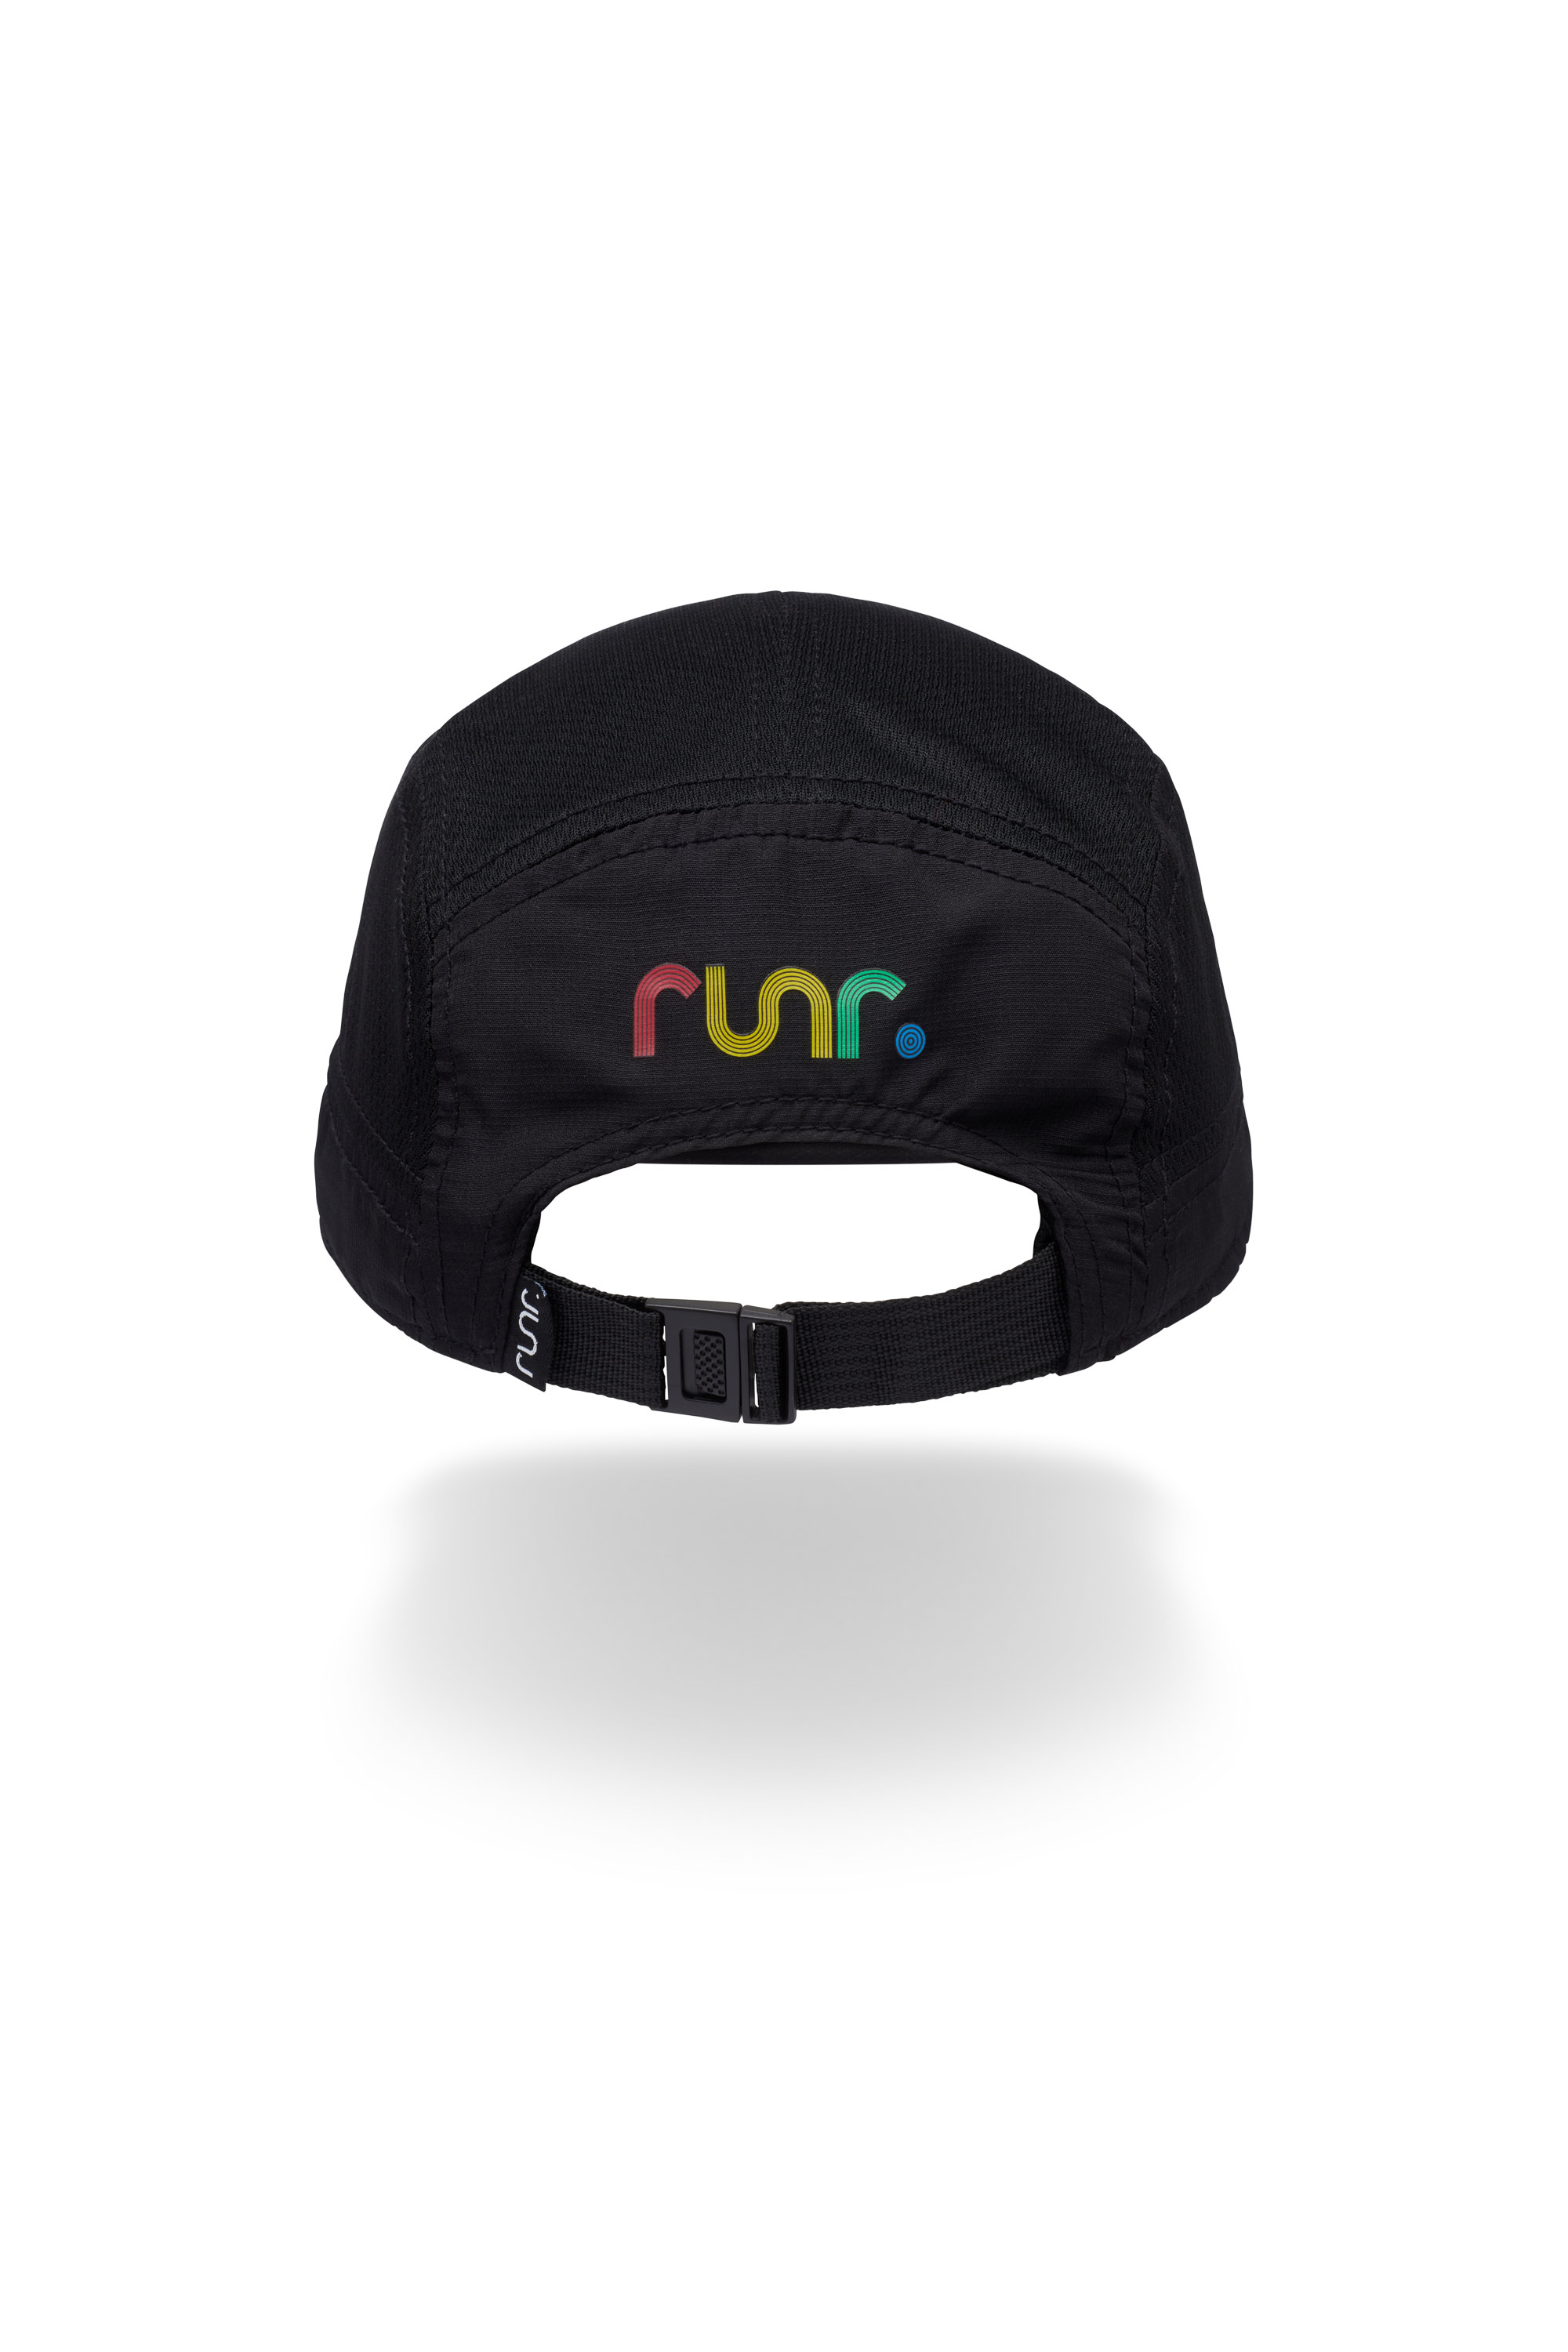 Runr 80's Technical Running Cap